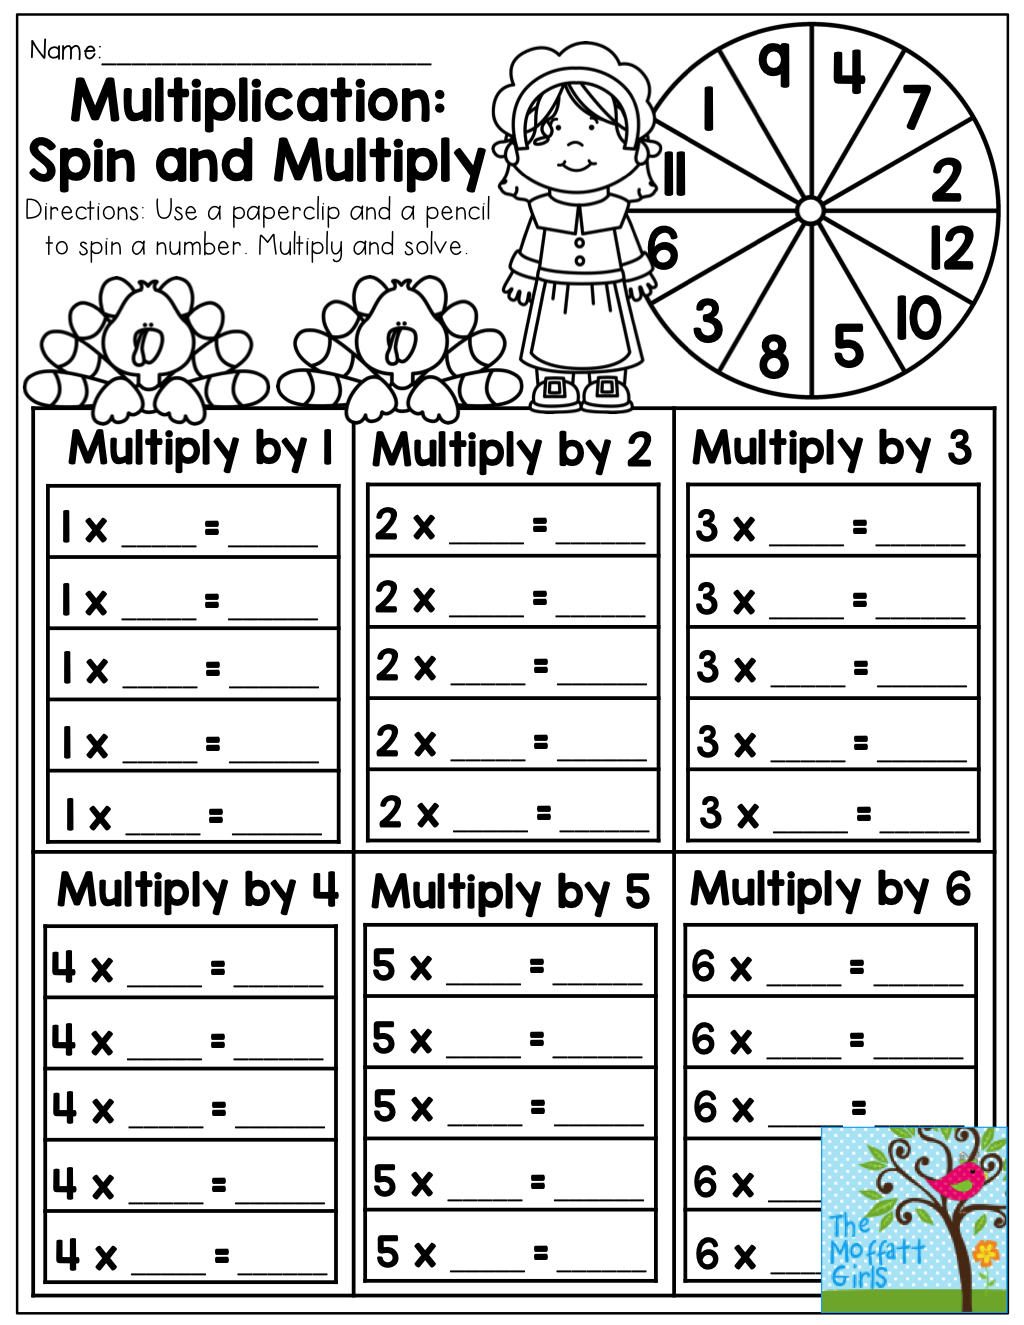 Multiplication Worksheets And Games PrintableMultiplication